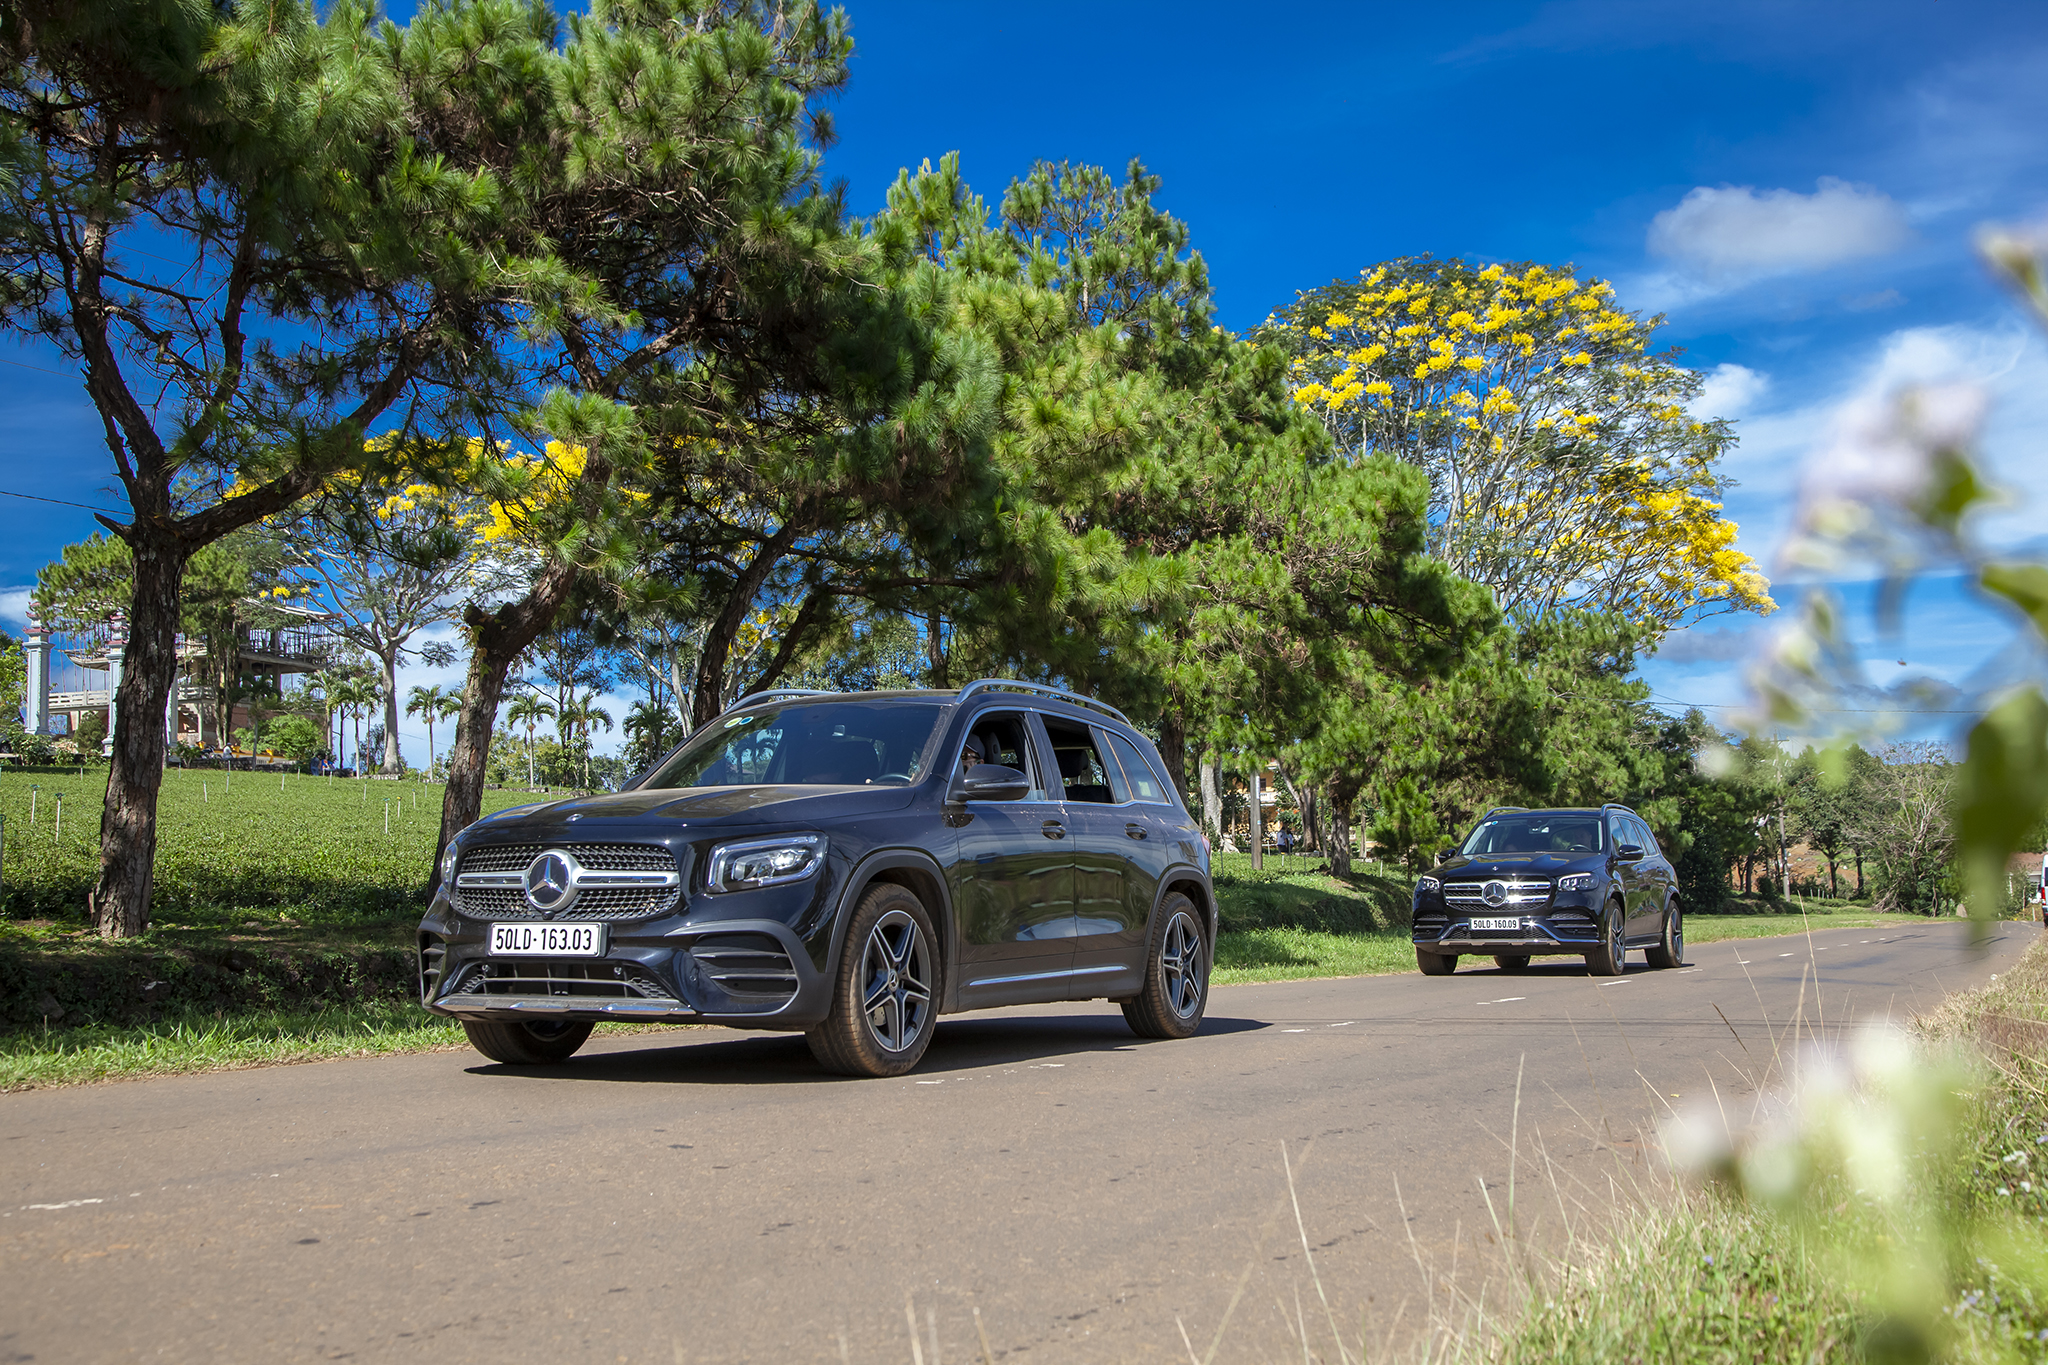 Mercedes-Heritage Photo Tour 2020: Du khảo giữa mùa hoa hoa-lim-set-autodaily-4.jpg